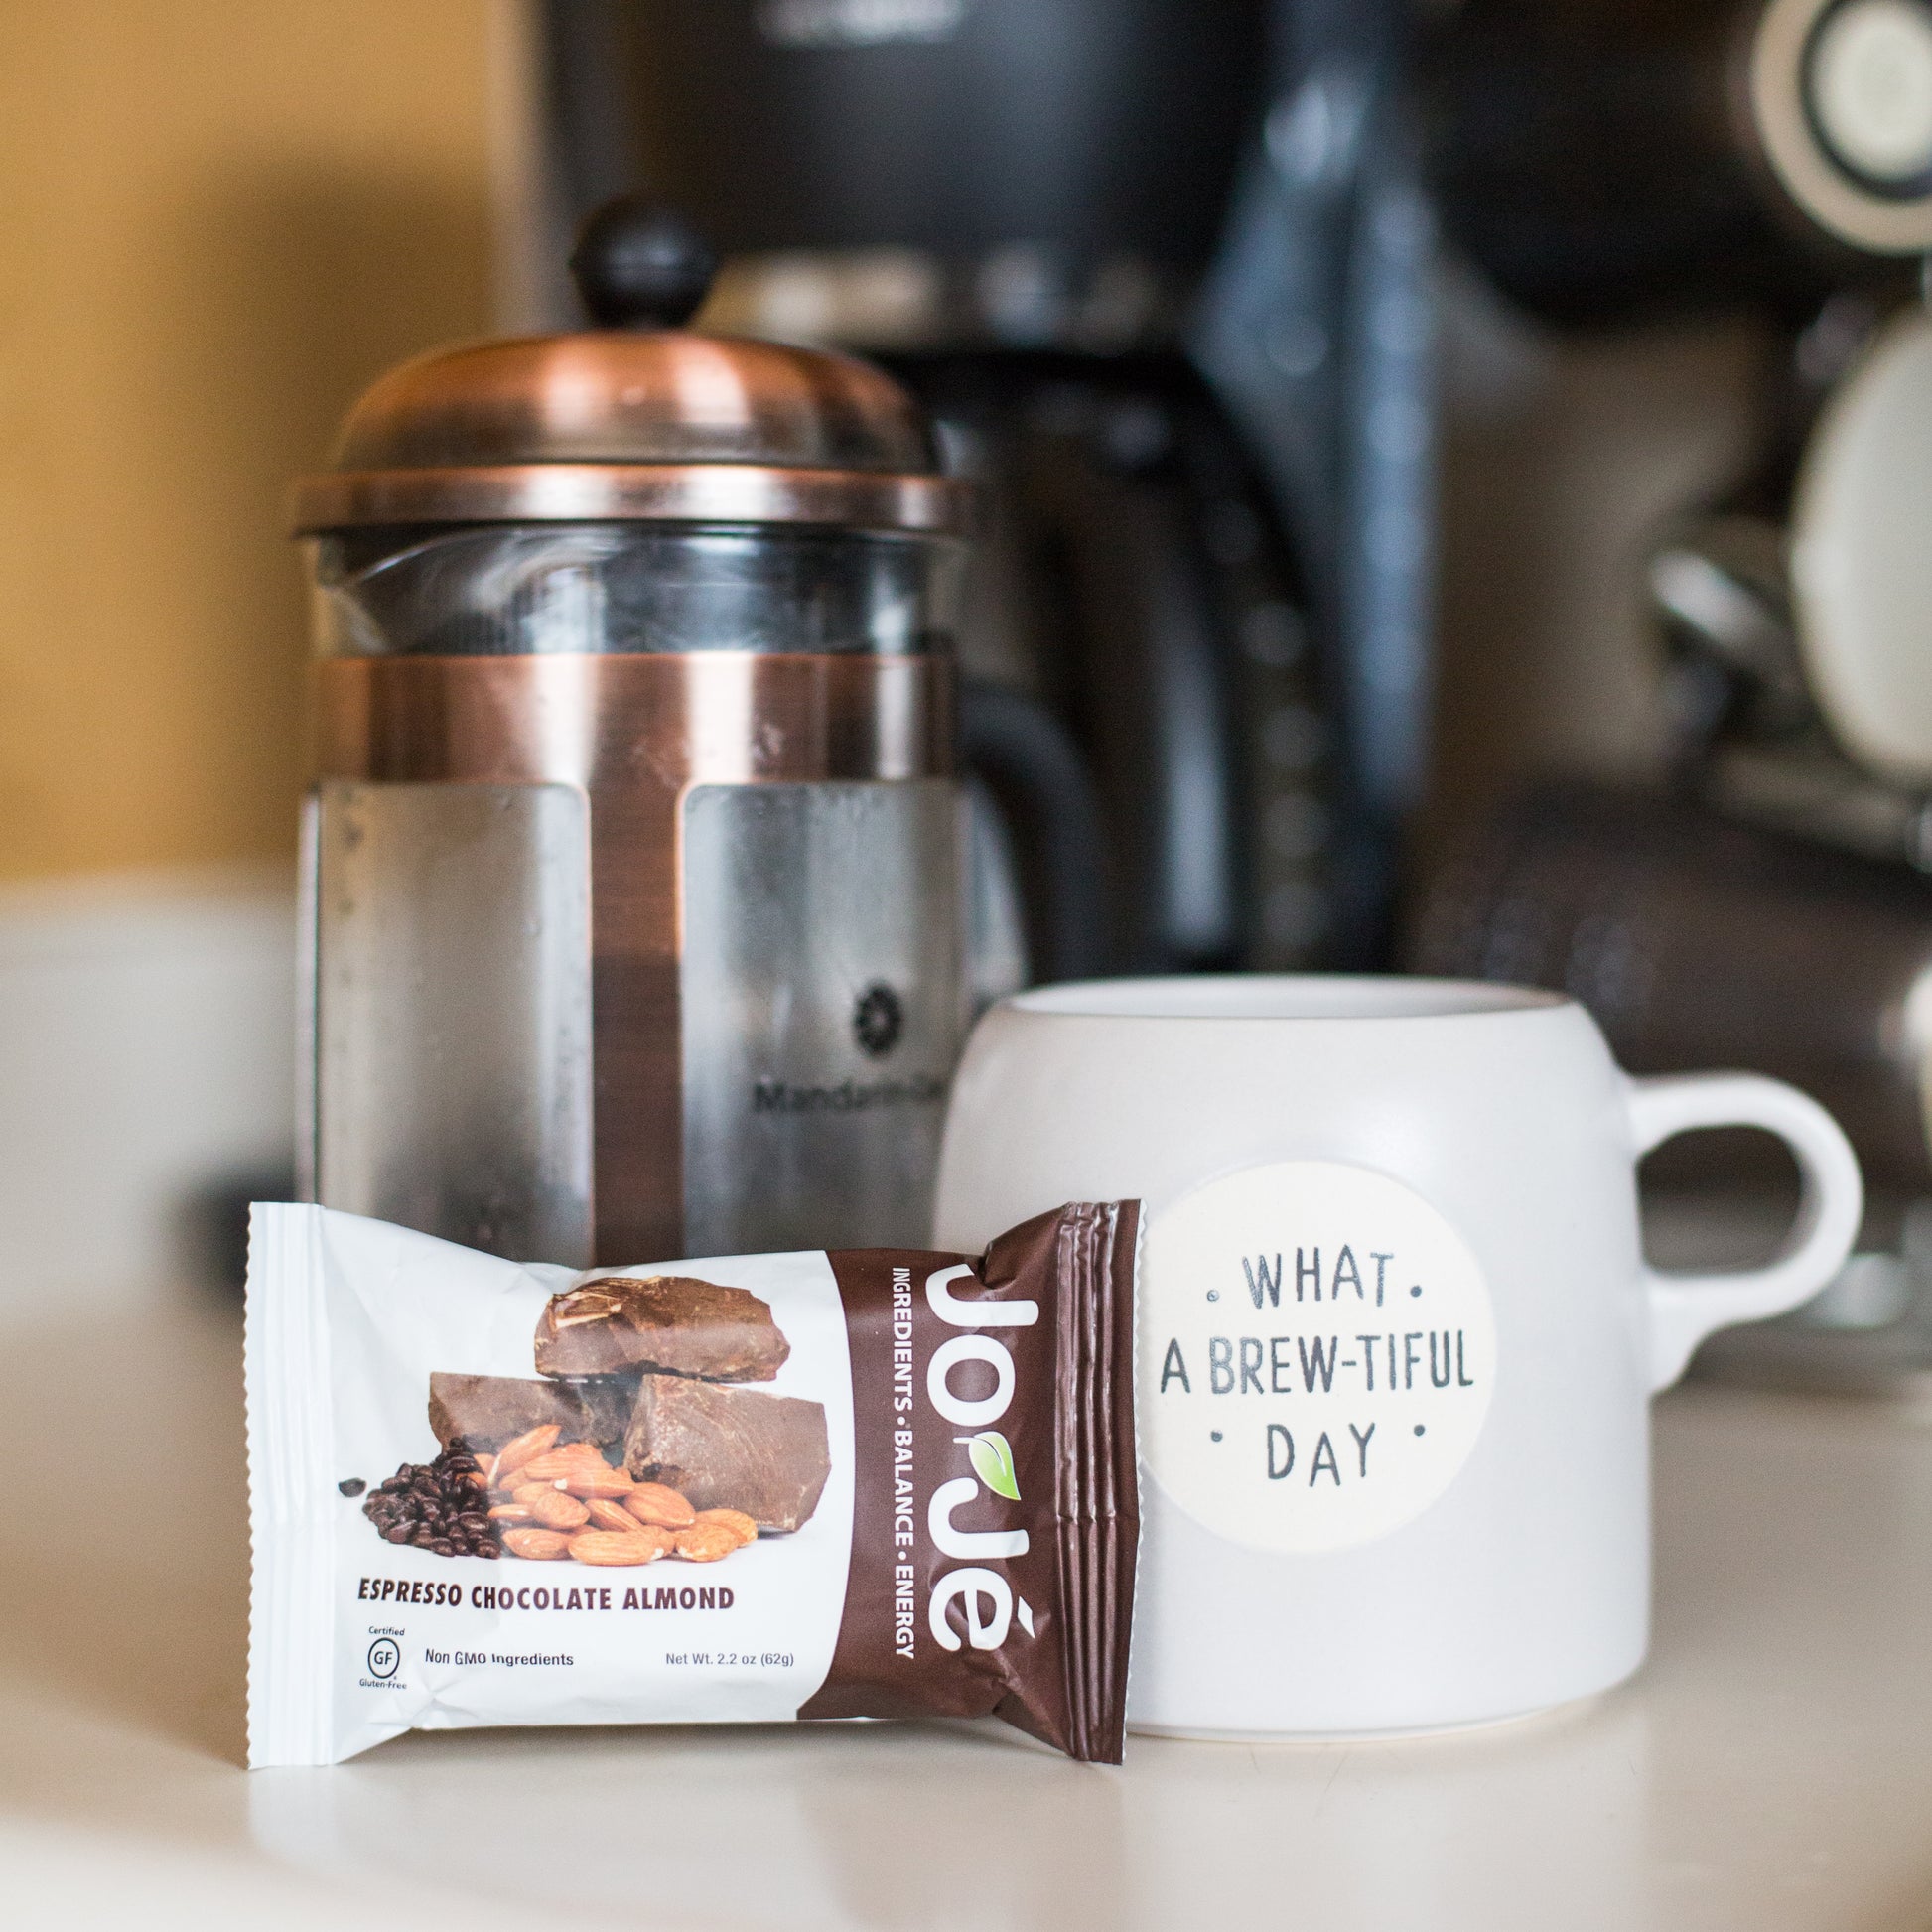 JoJé Espresso Chocolate Almond Bar with a coffee maker and mug